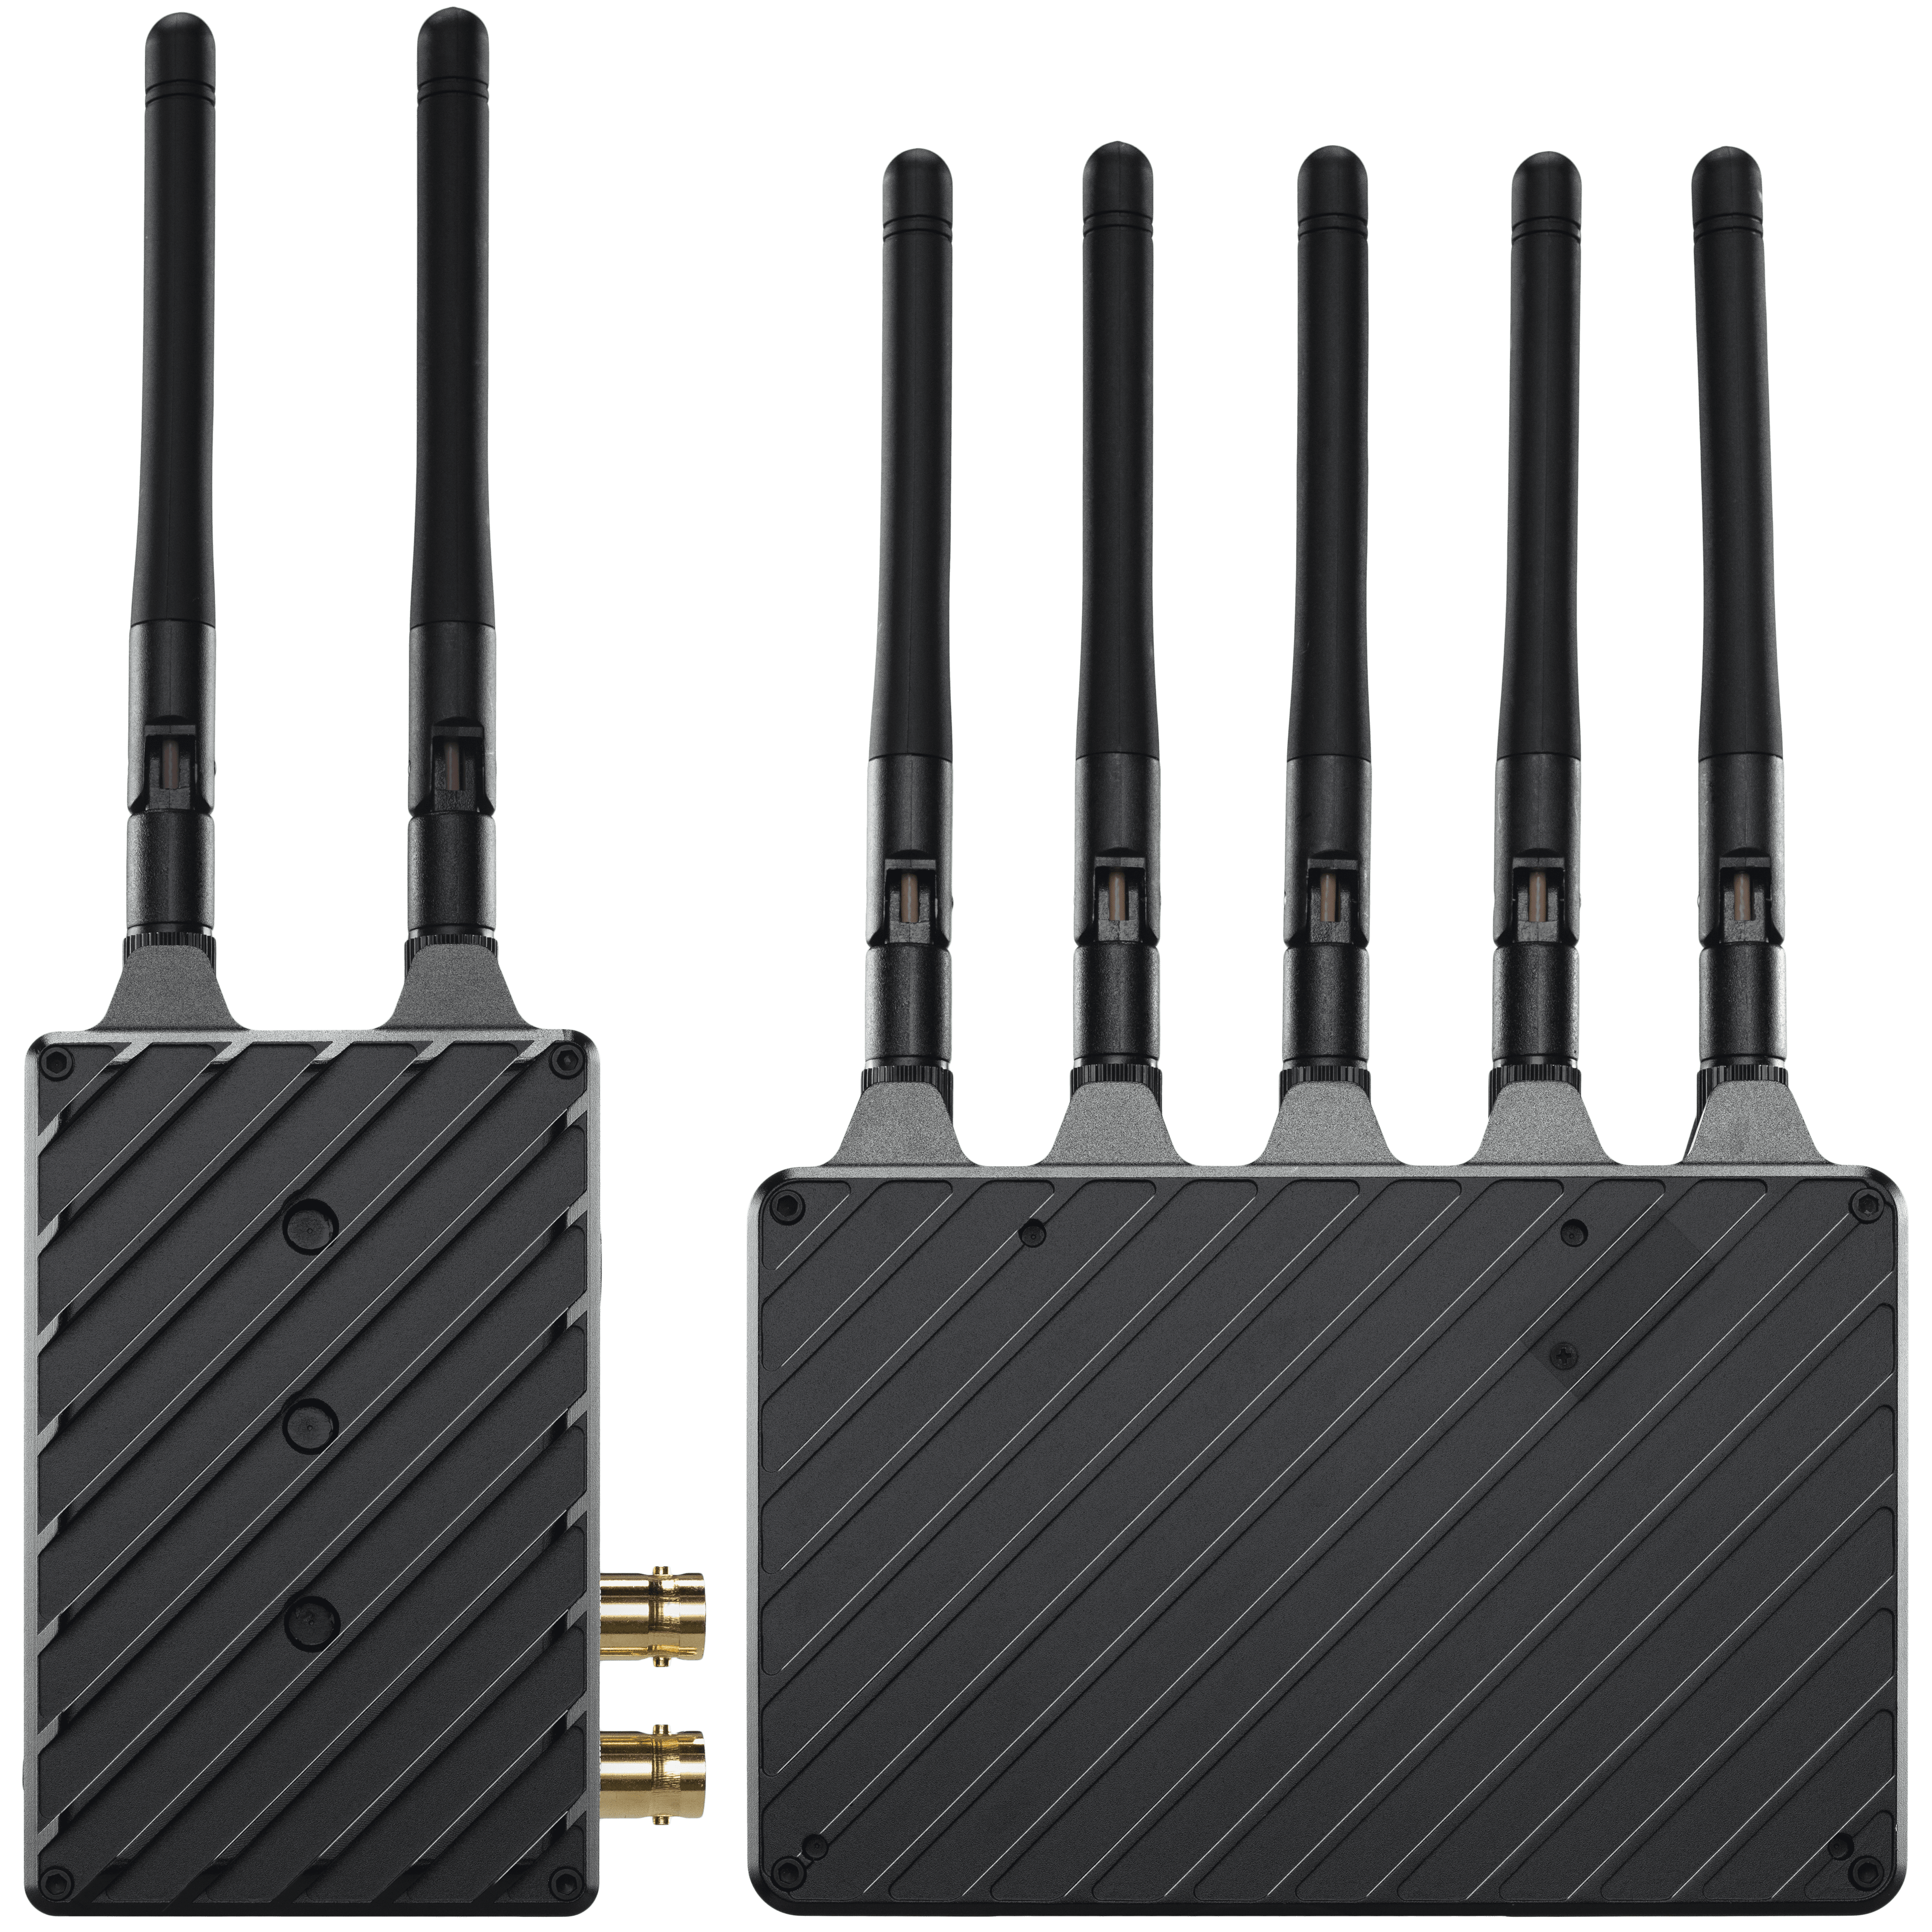 Teradek Bolt 4K LT 750 Wireless Transmitter/Receiver Set